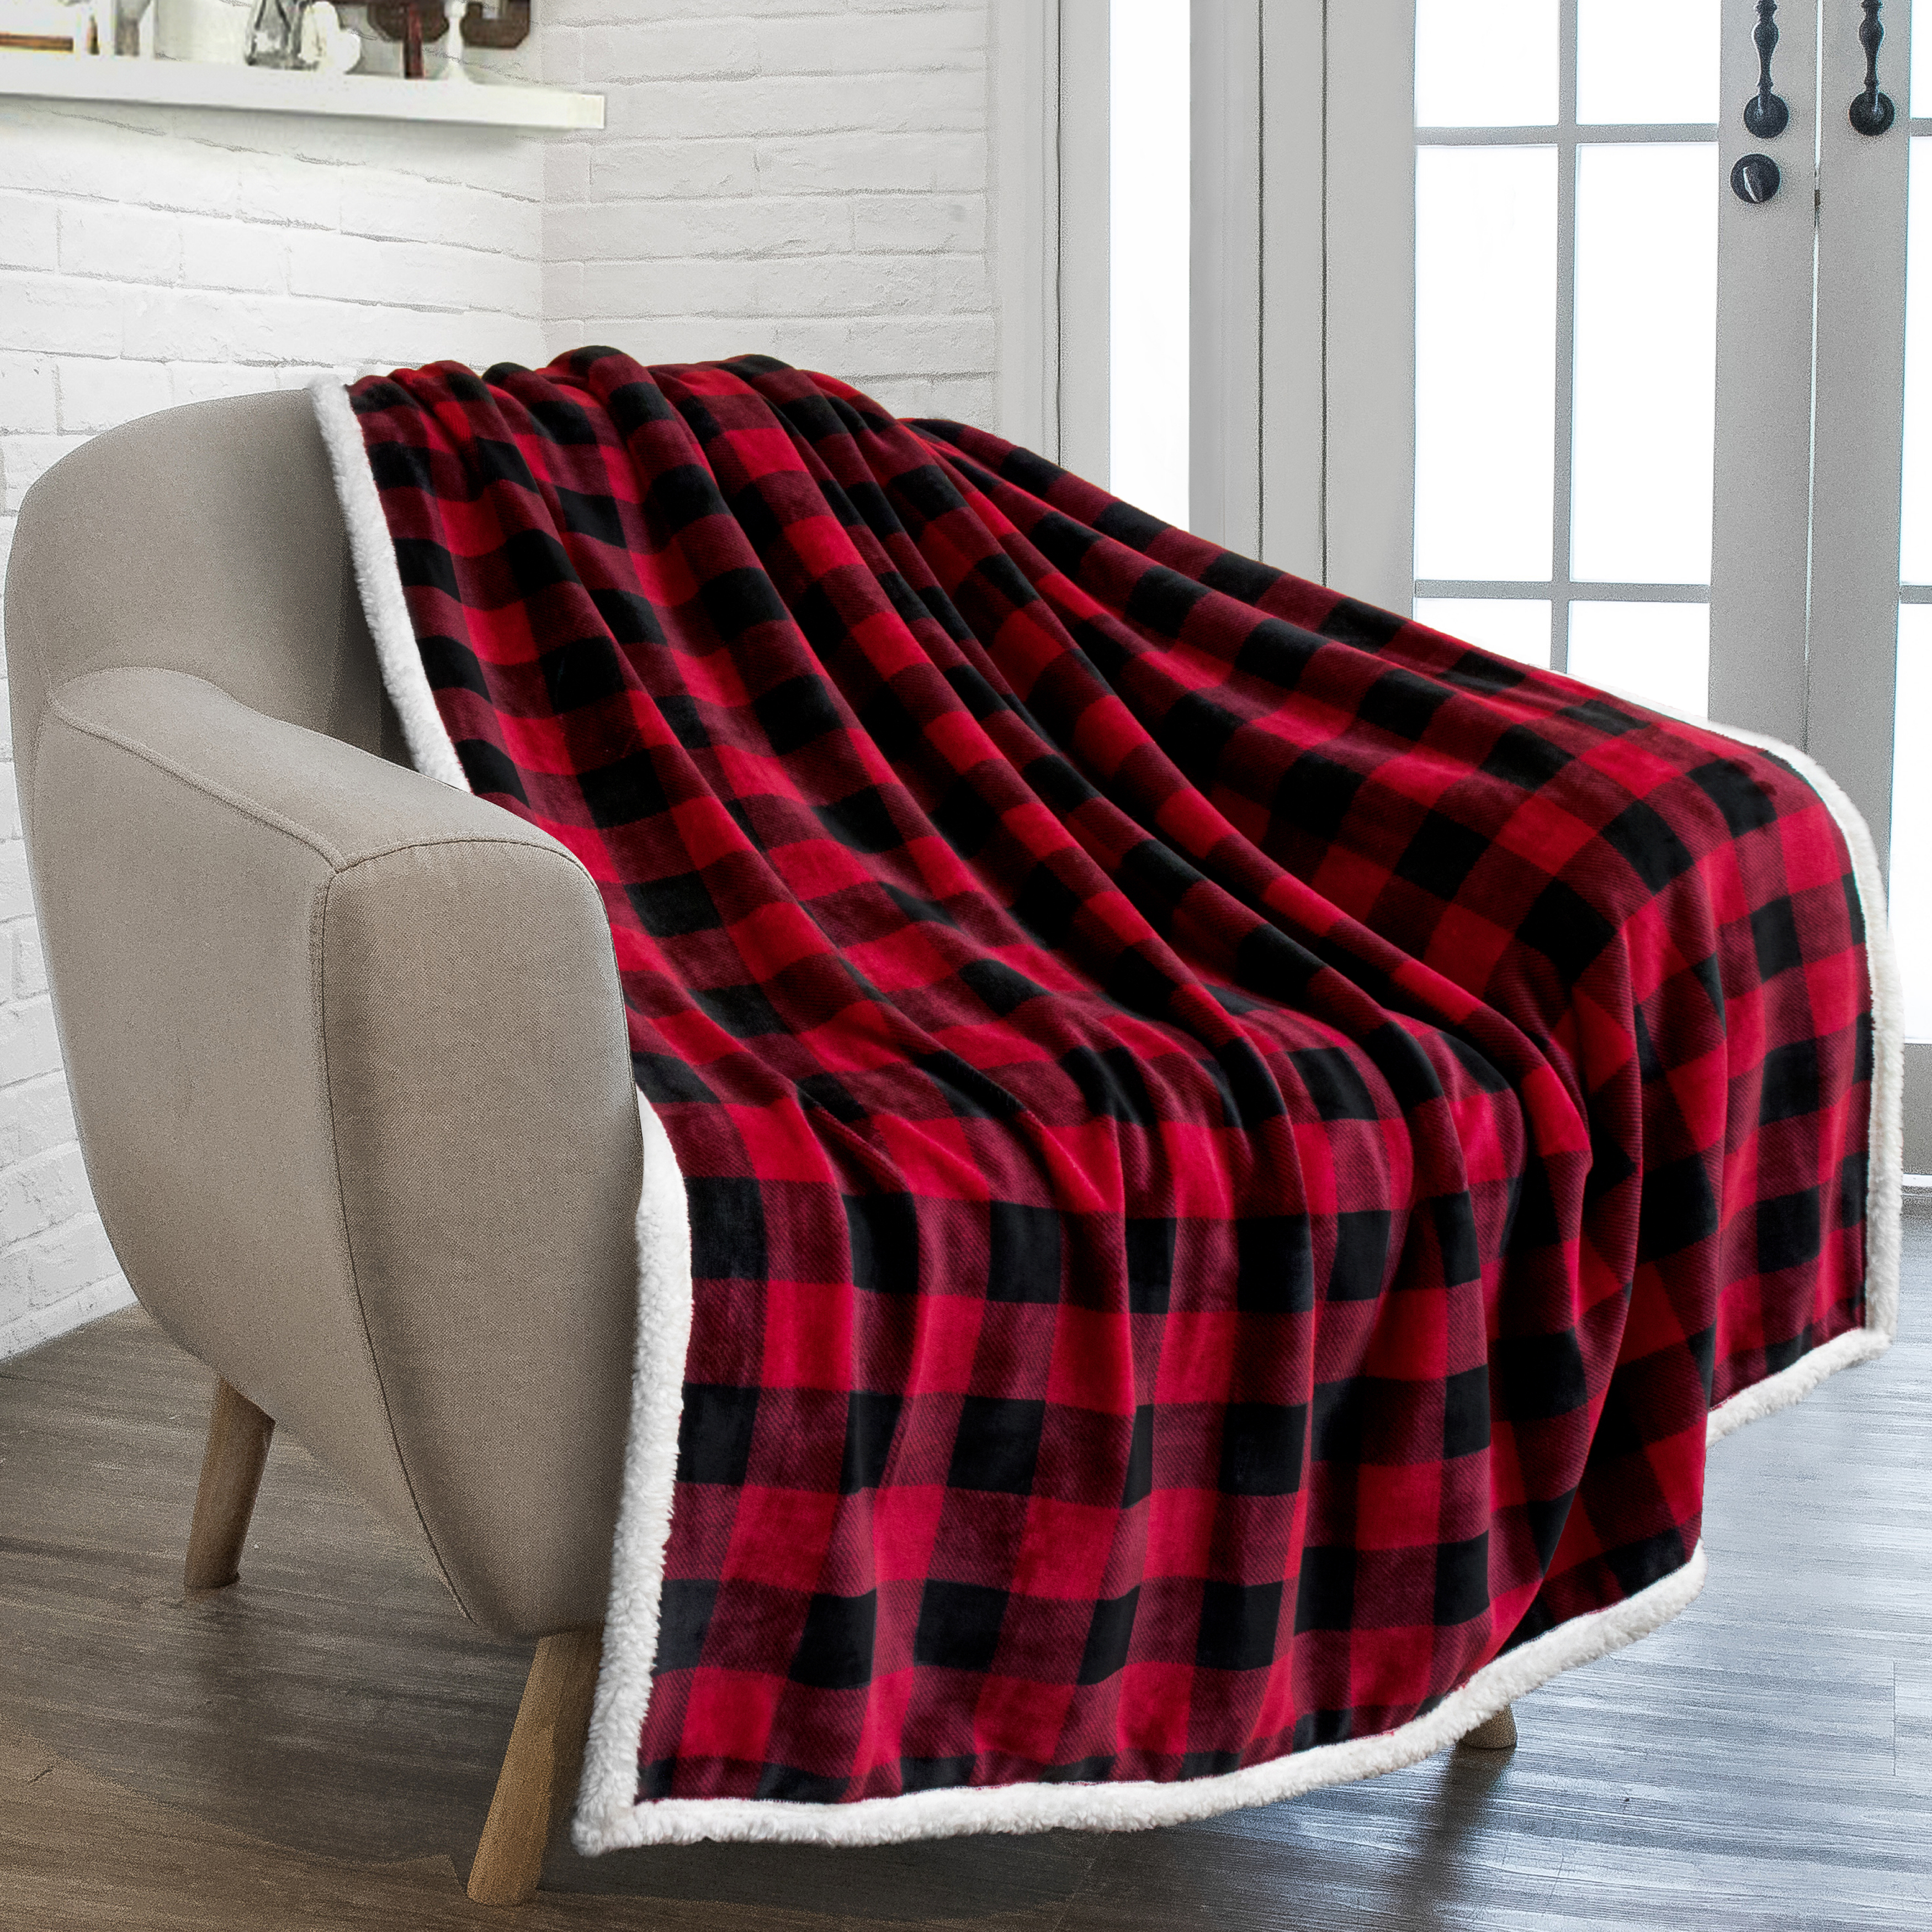 Plaid Buffalo Checker Christmas Throw Blanket Soft Sherpa Fleece For Sofa Couch EBay